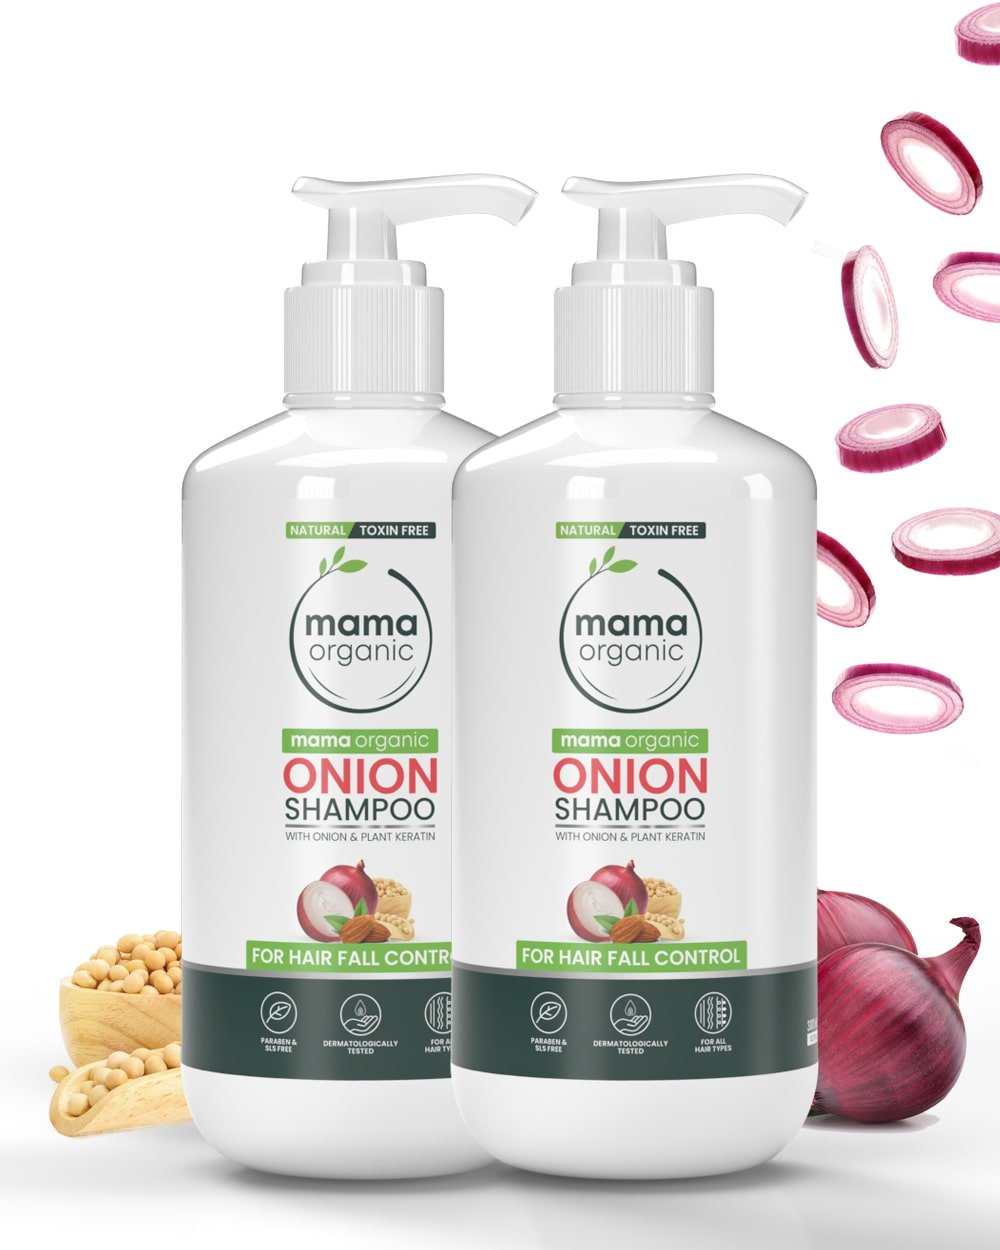 Onion Hiar Shampoo 300ml Combo For Hair Fall Control - Natural & Toxin-Free - MamaOrganic